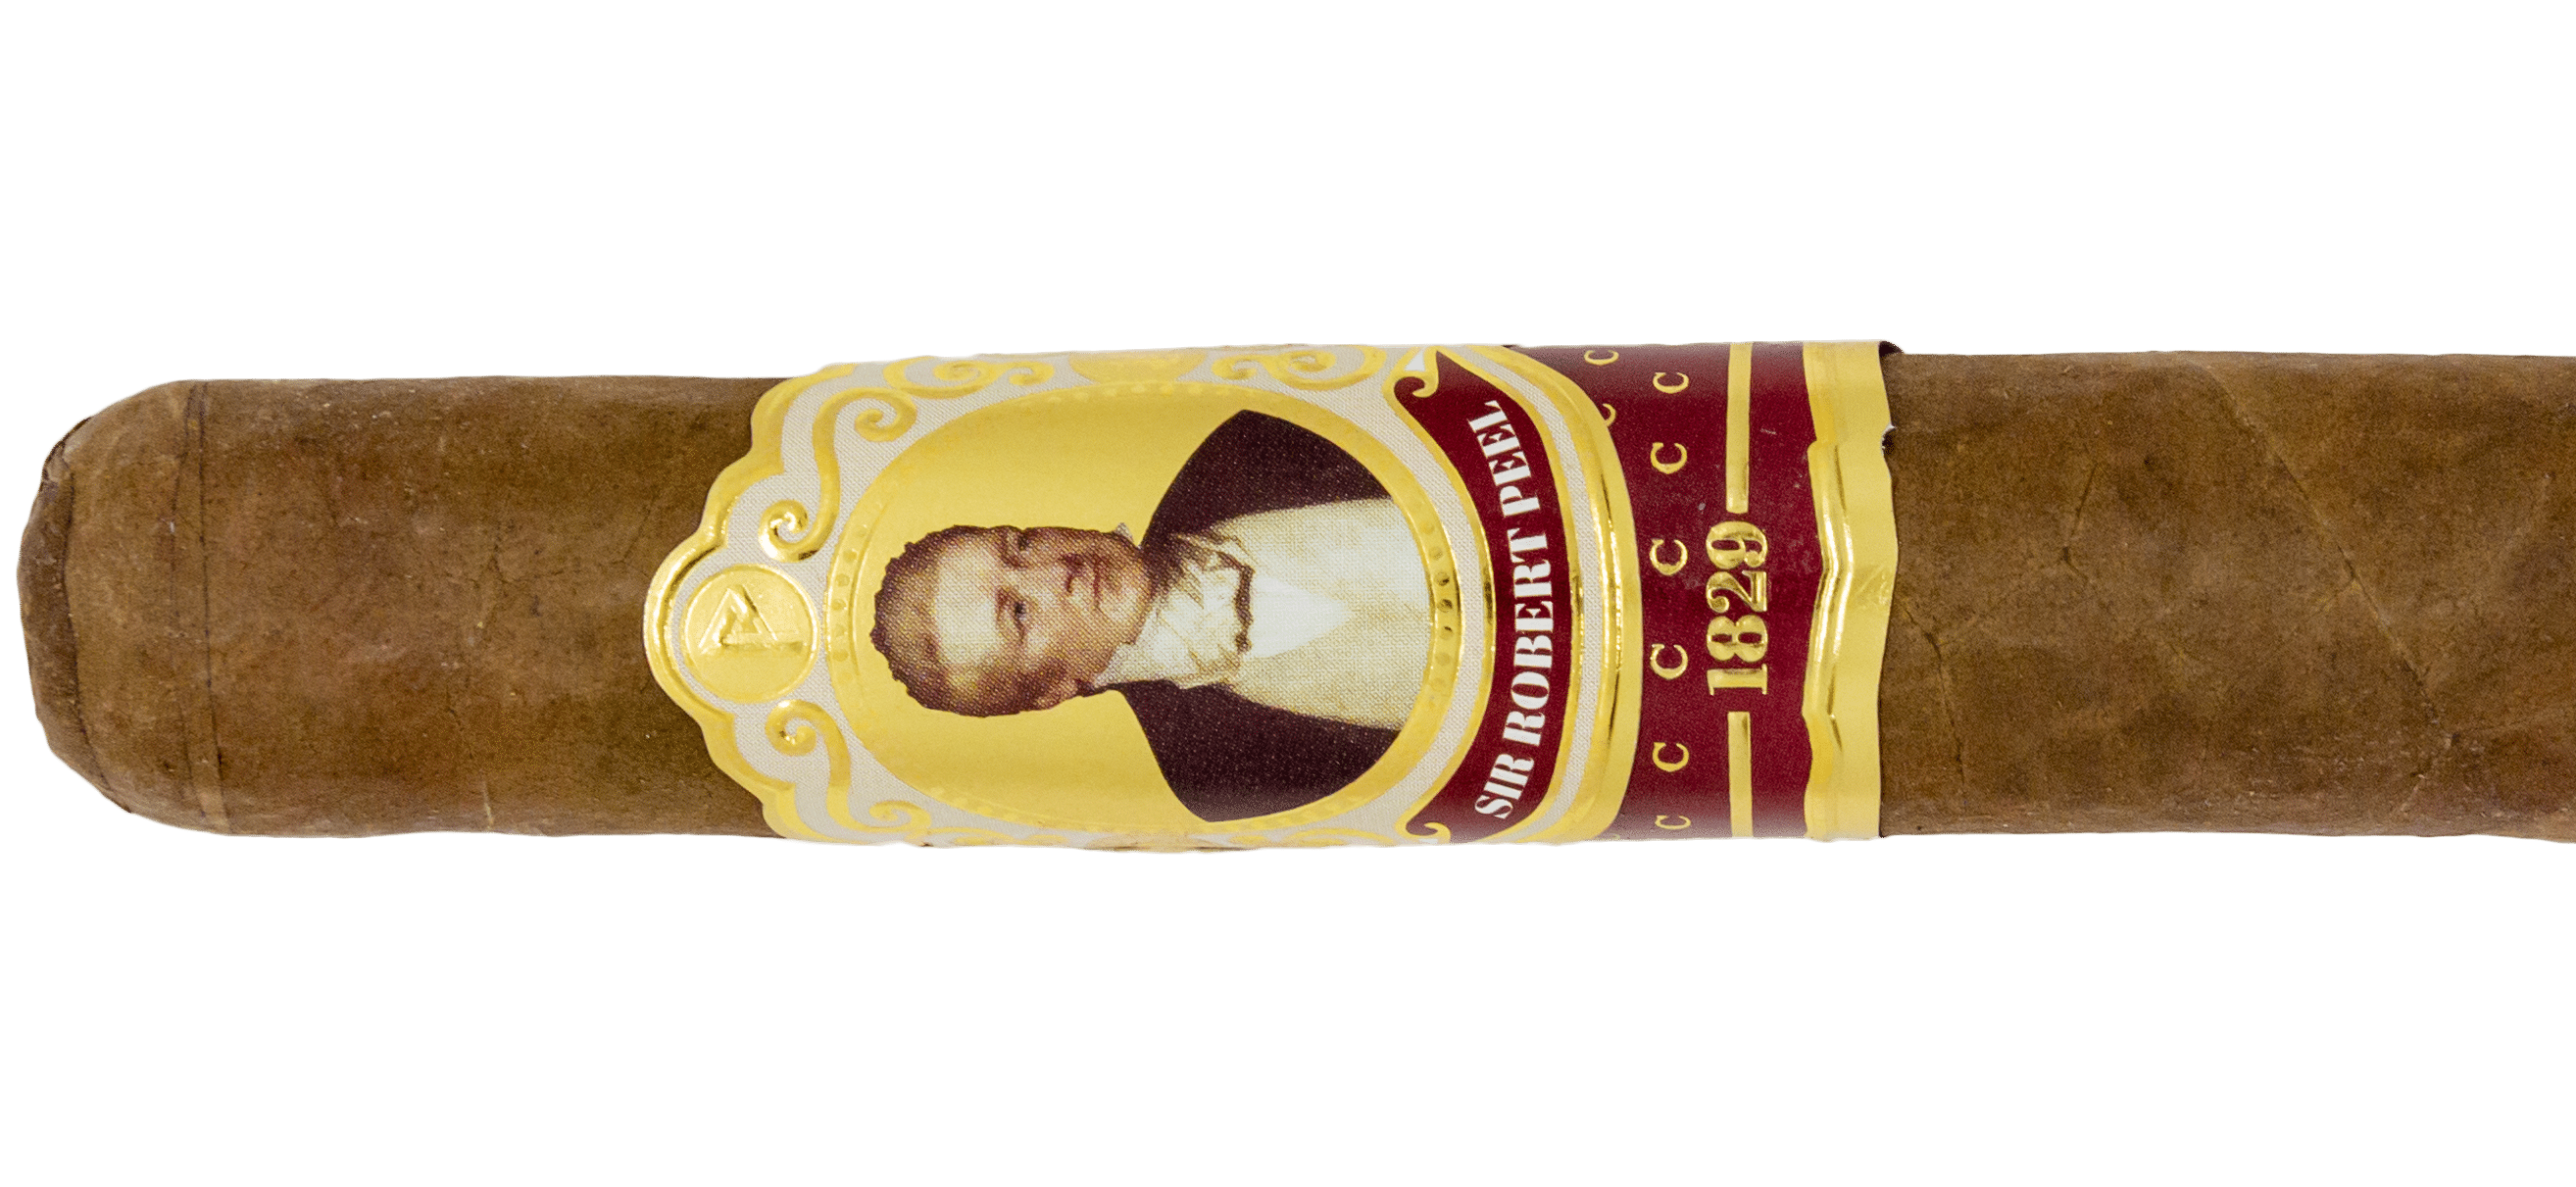 Protocol Sir Robert Peel Natural Corona Gorda - Blind Cigar Review